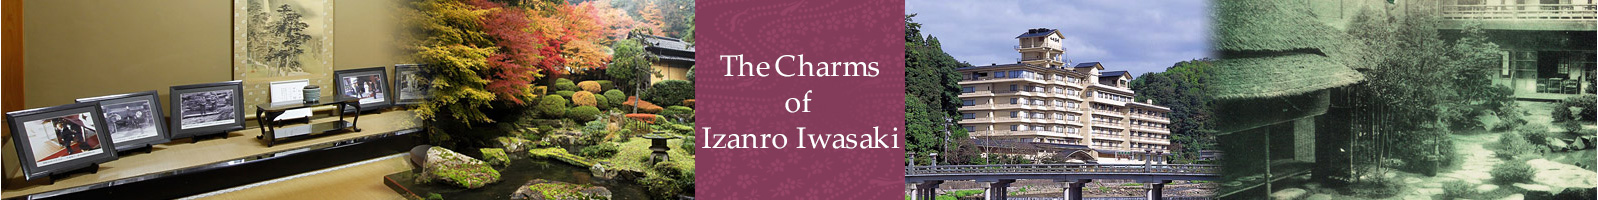 THE CHARMS OF IZANRO IWASAKI